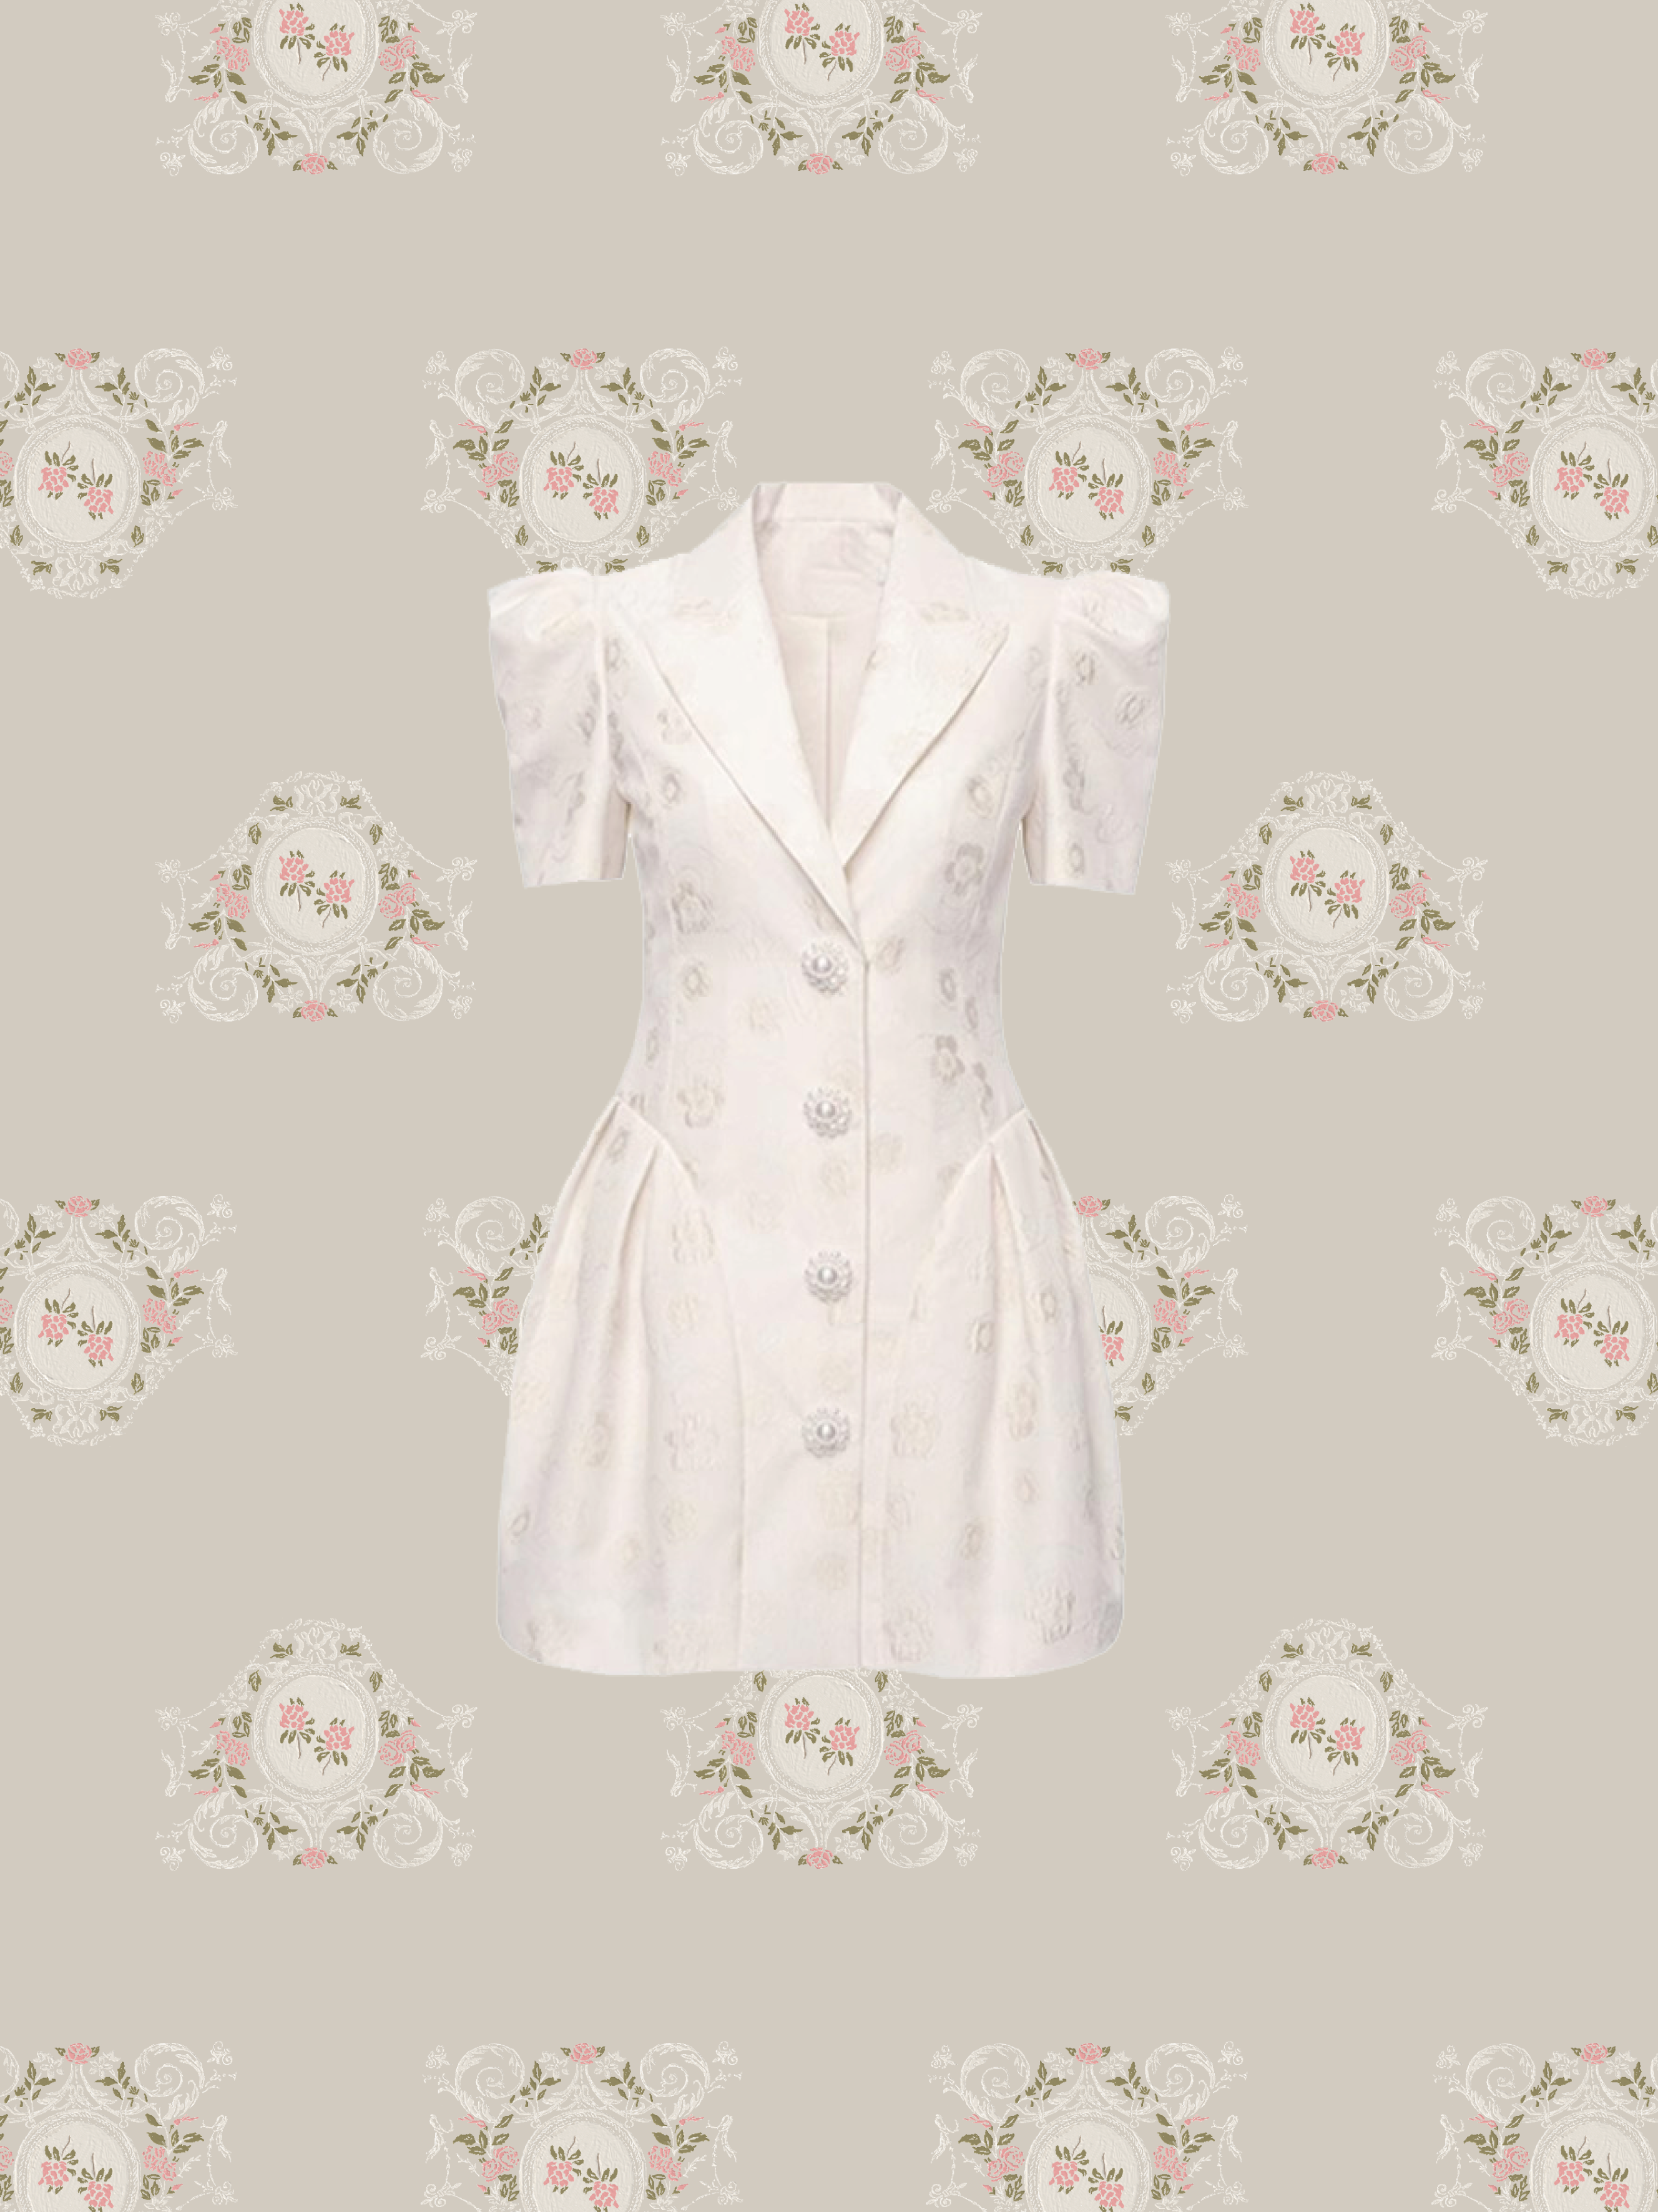 Elegant Flower Embroidery Jacket Dress  エレガントフラワー刺繍ジャケットドレス